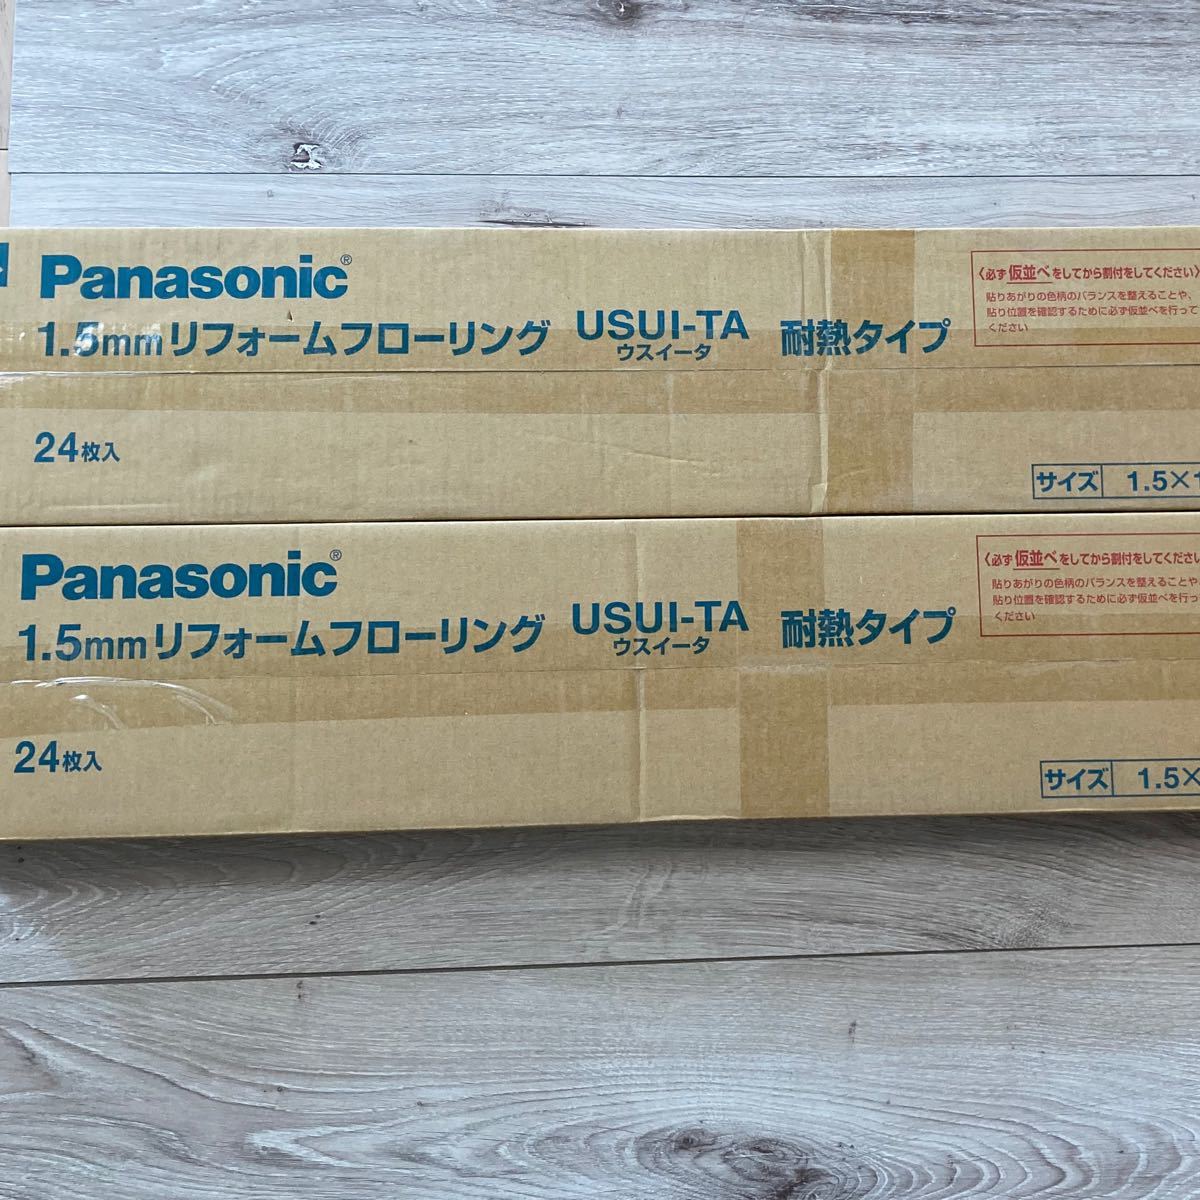 Panasonic ウスイータ 耐熱 ホワイトオーク | monsterdog.com.br